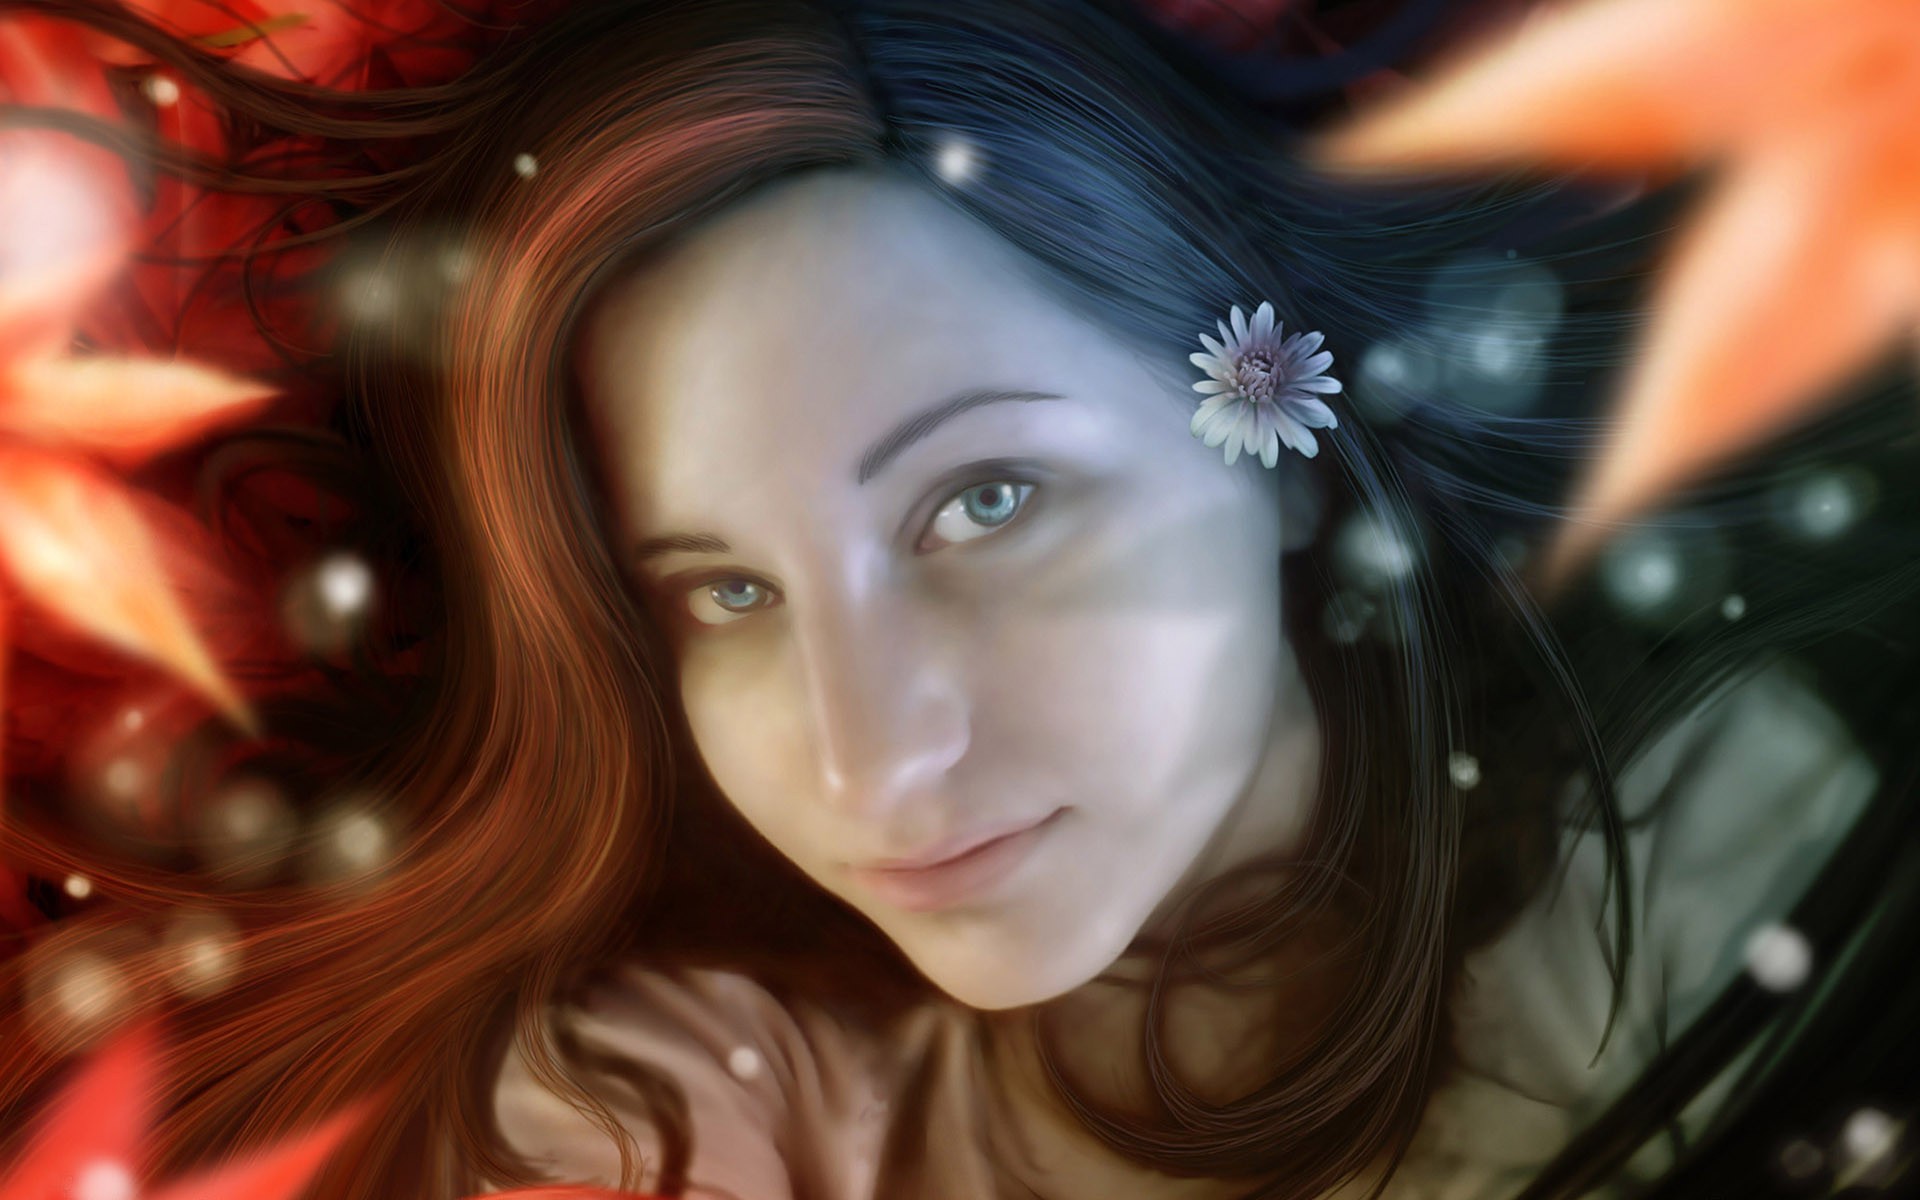 General 1920x1200 face flower in hair fantasy girl women looking at viewer digital art closeup